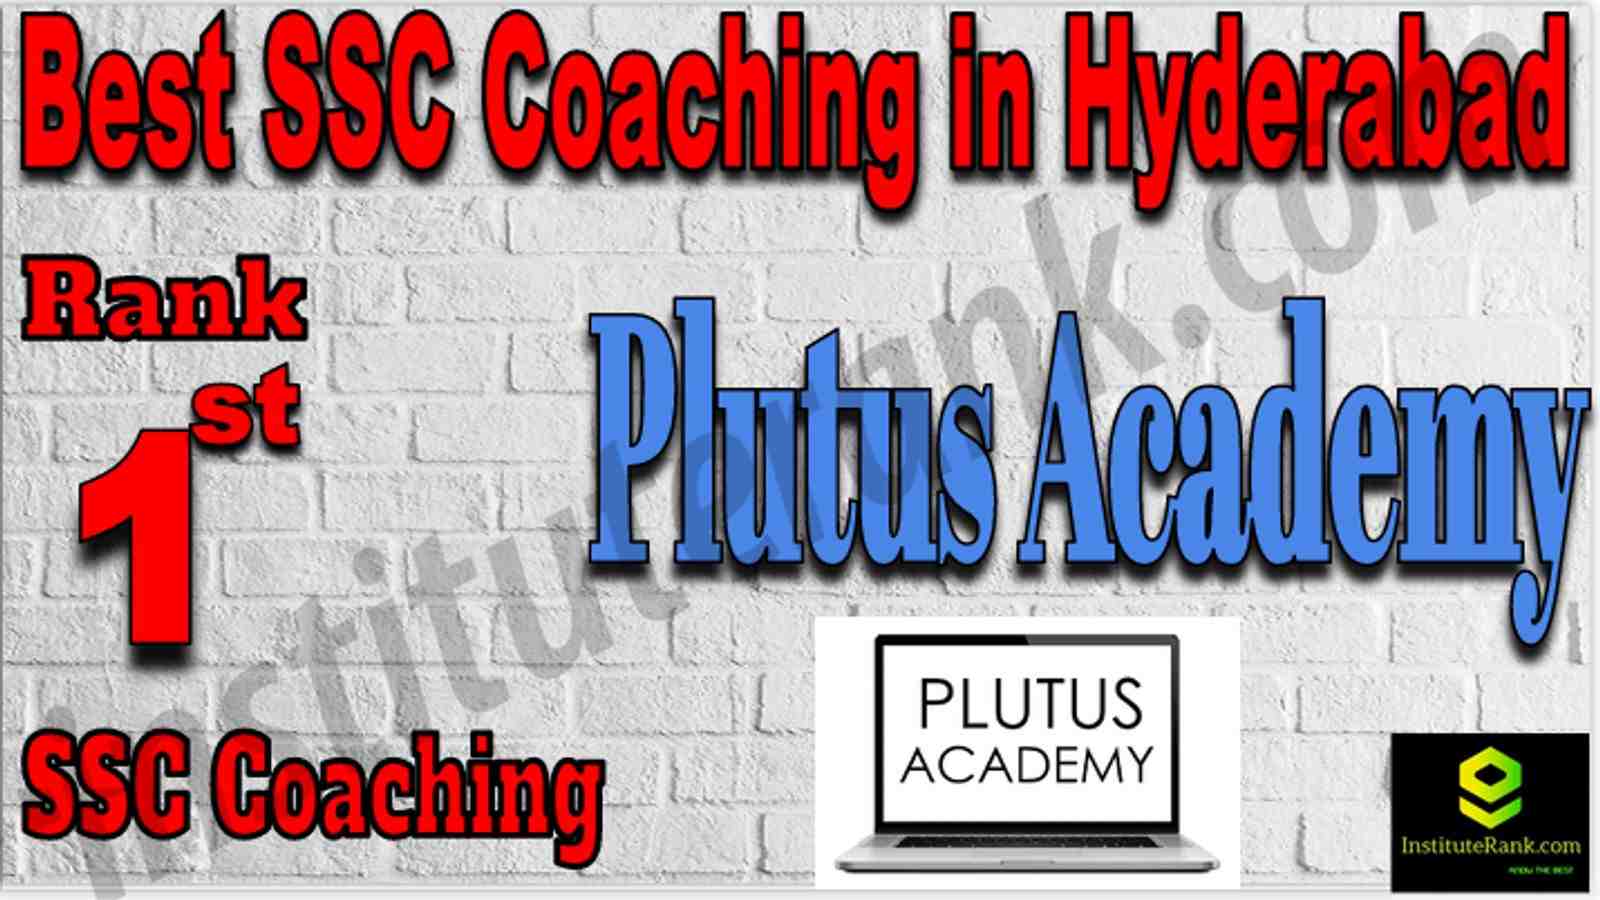 Rank 1 Best SSC Coaching in Hyderabad